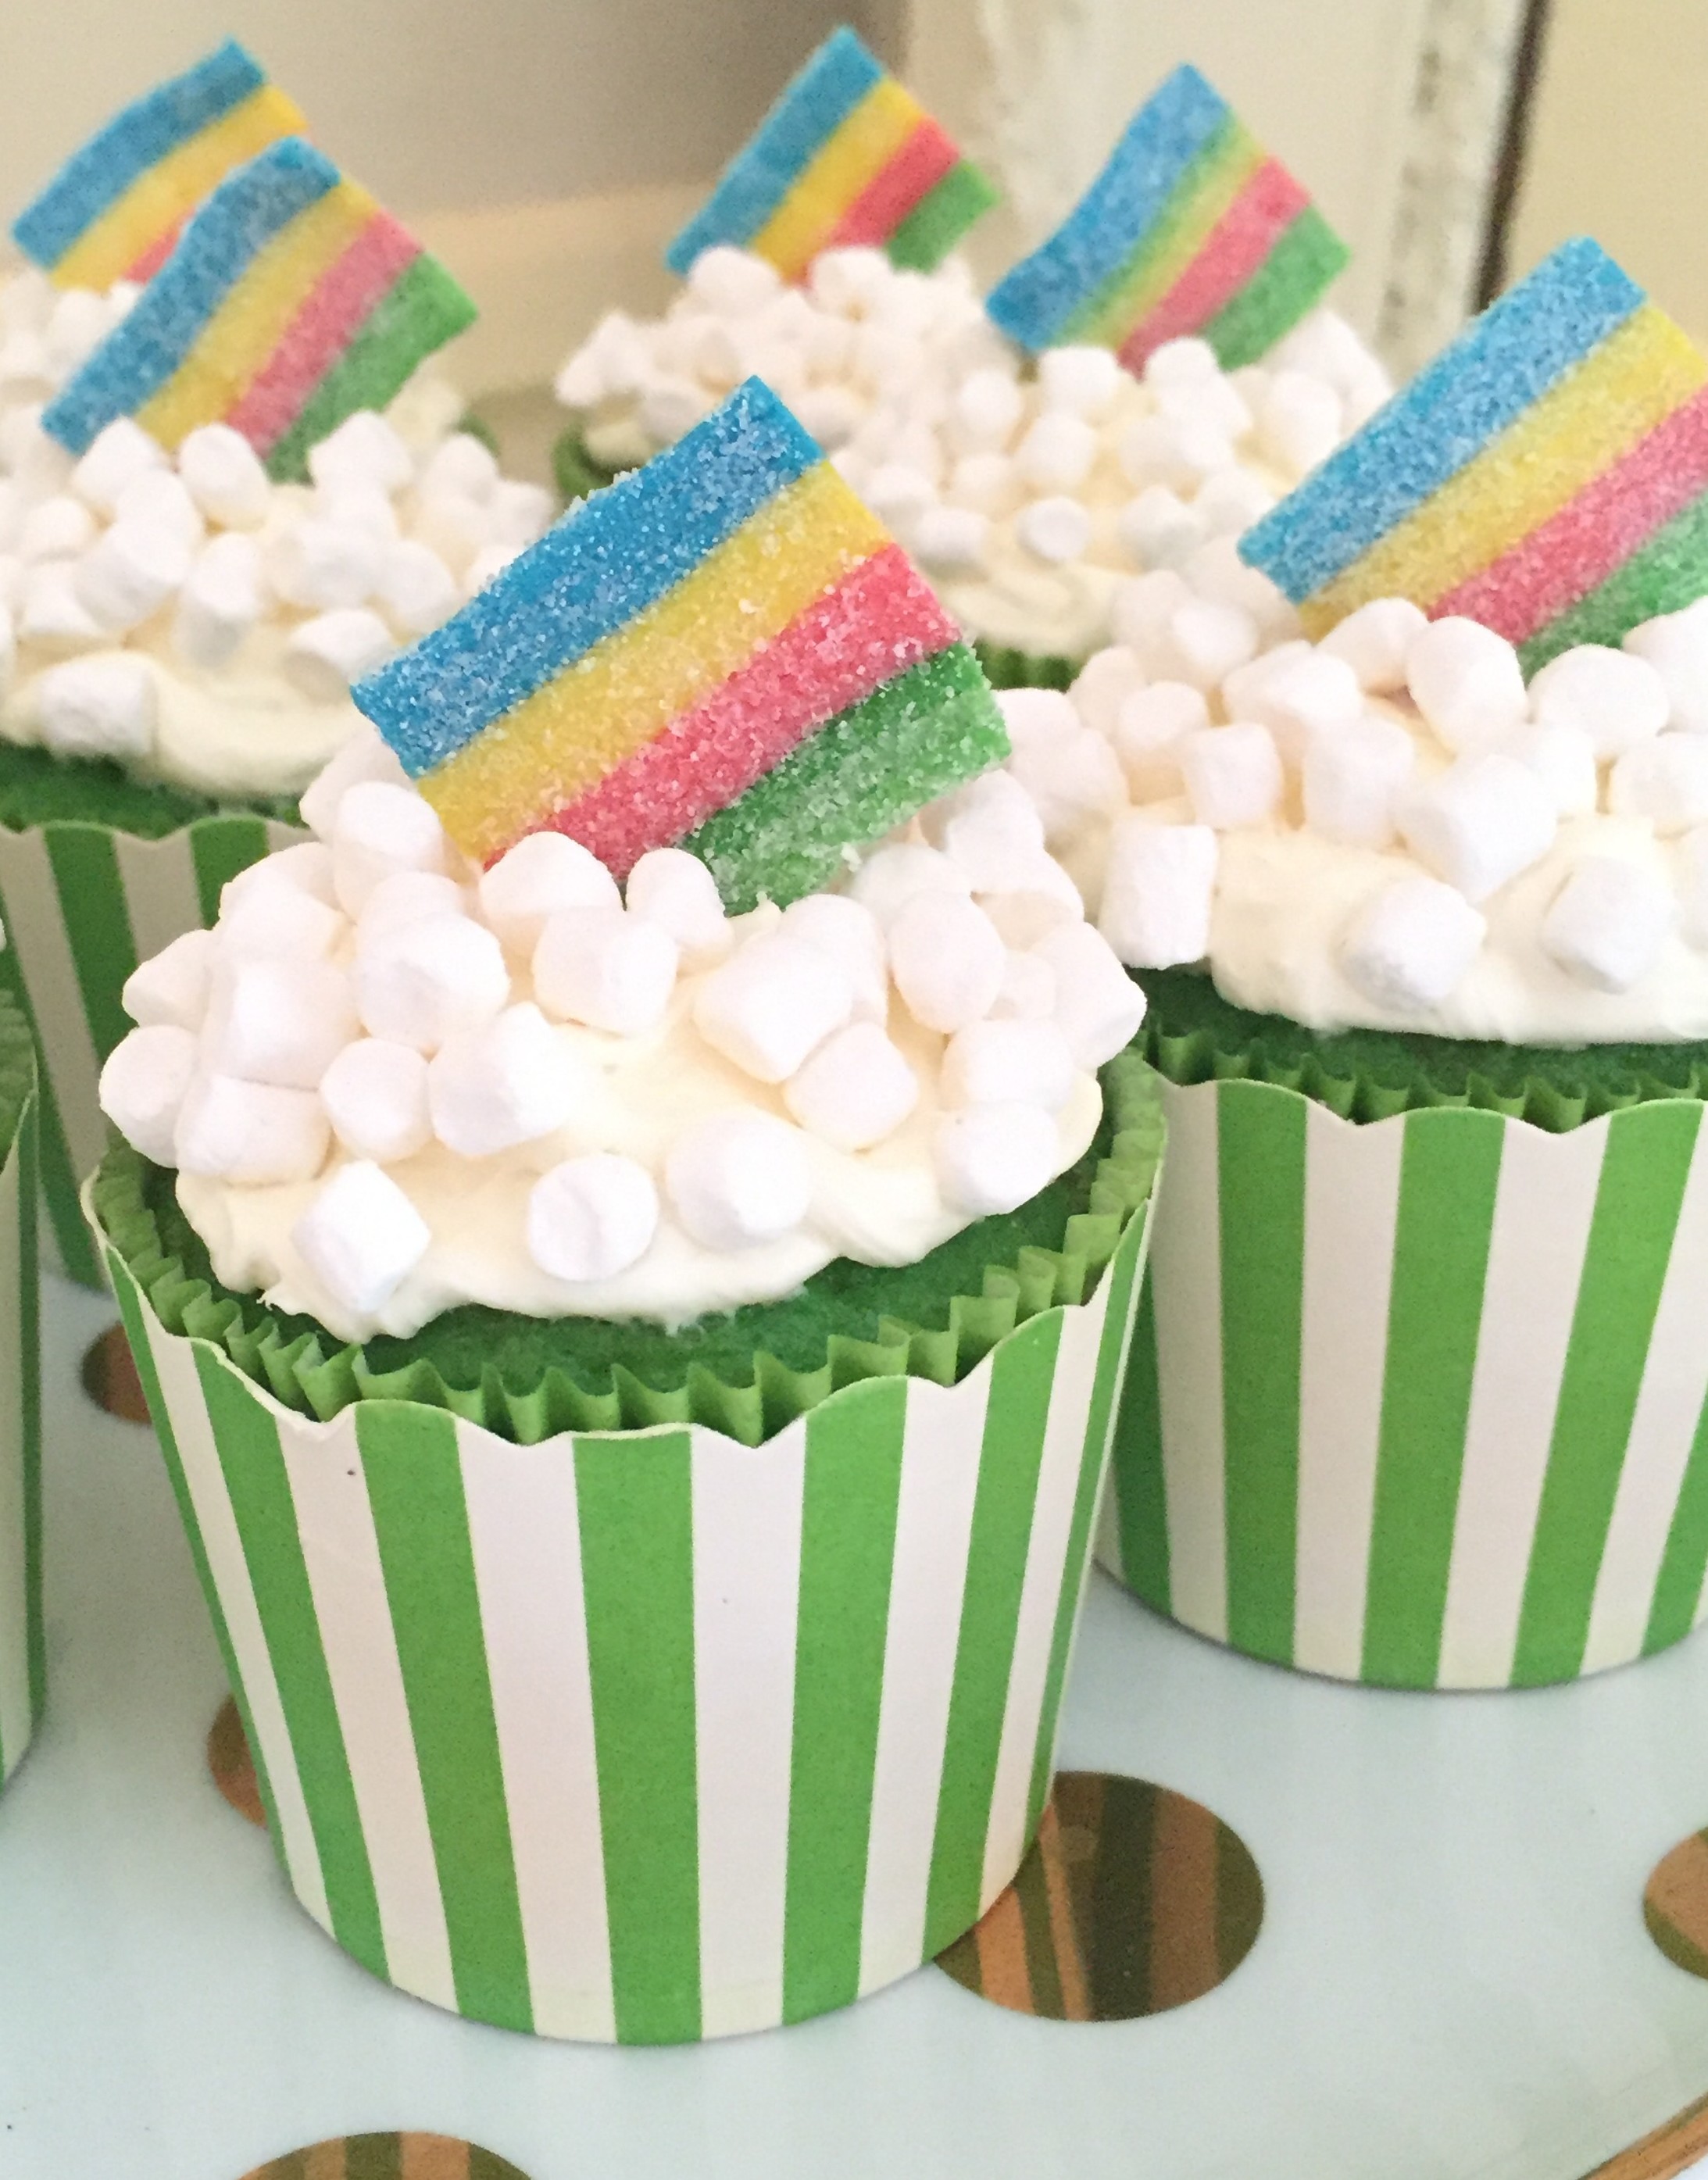 Irish rainbow cakes